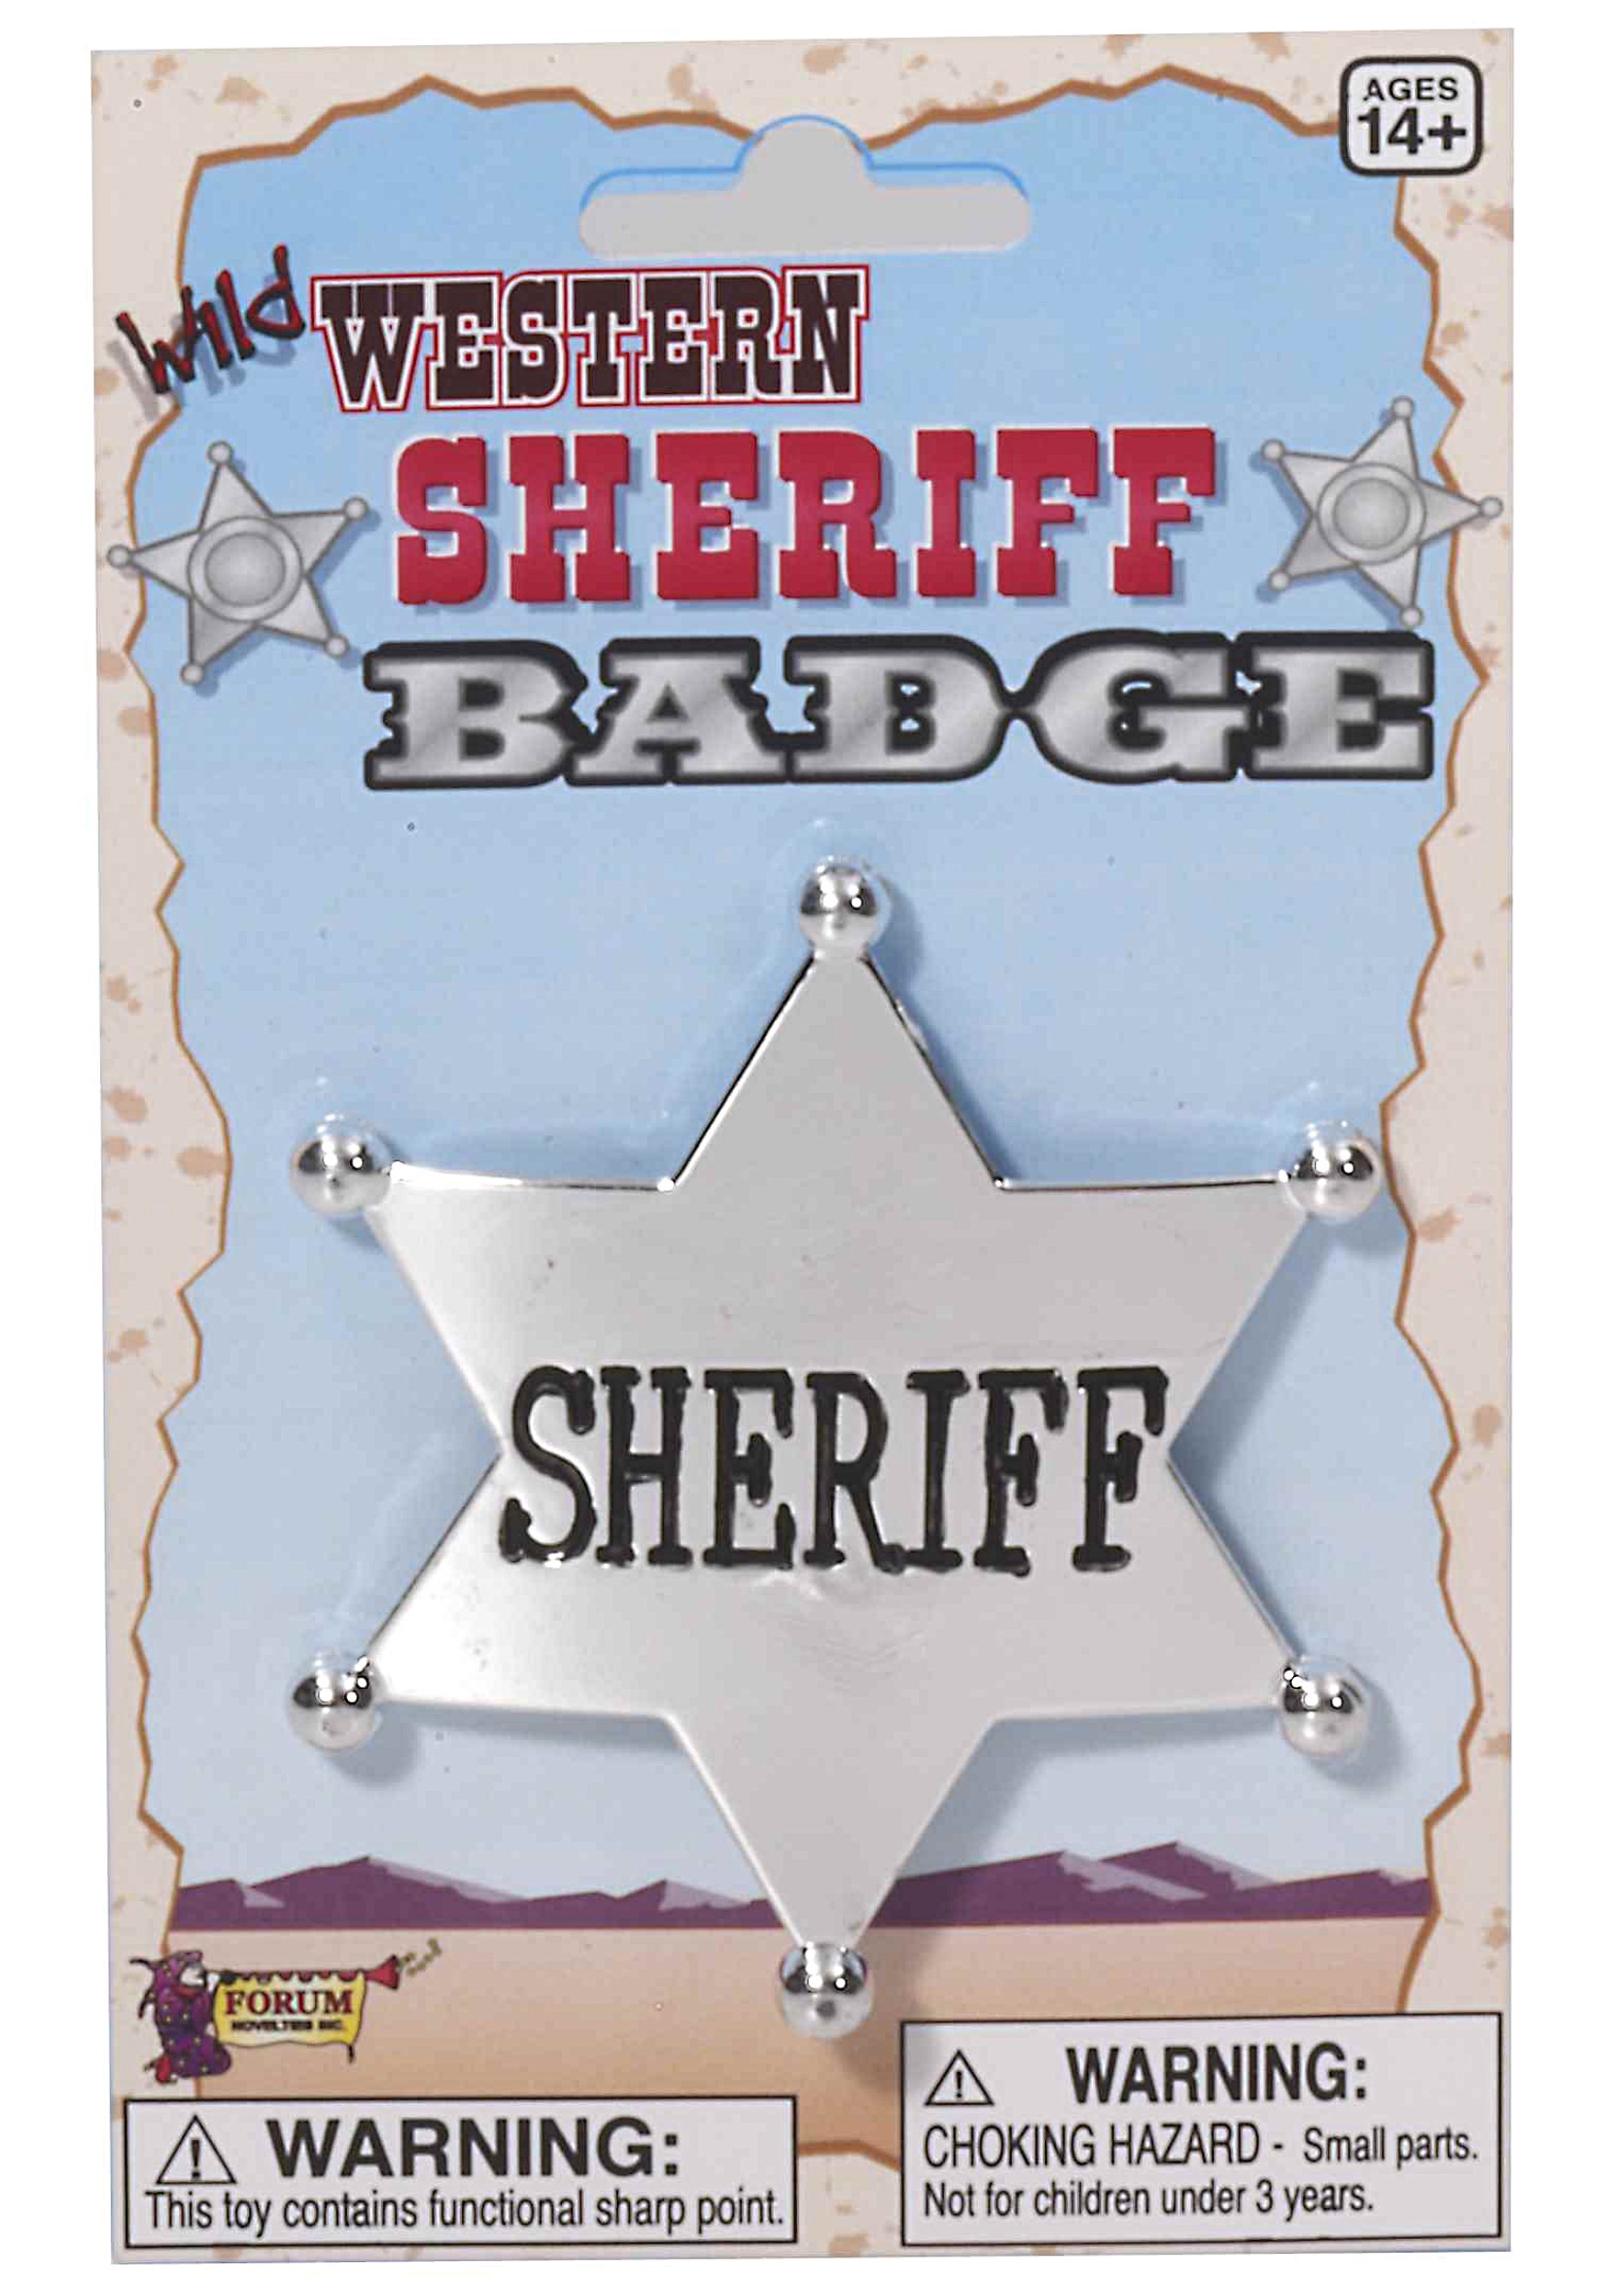 western sheriff badge